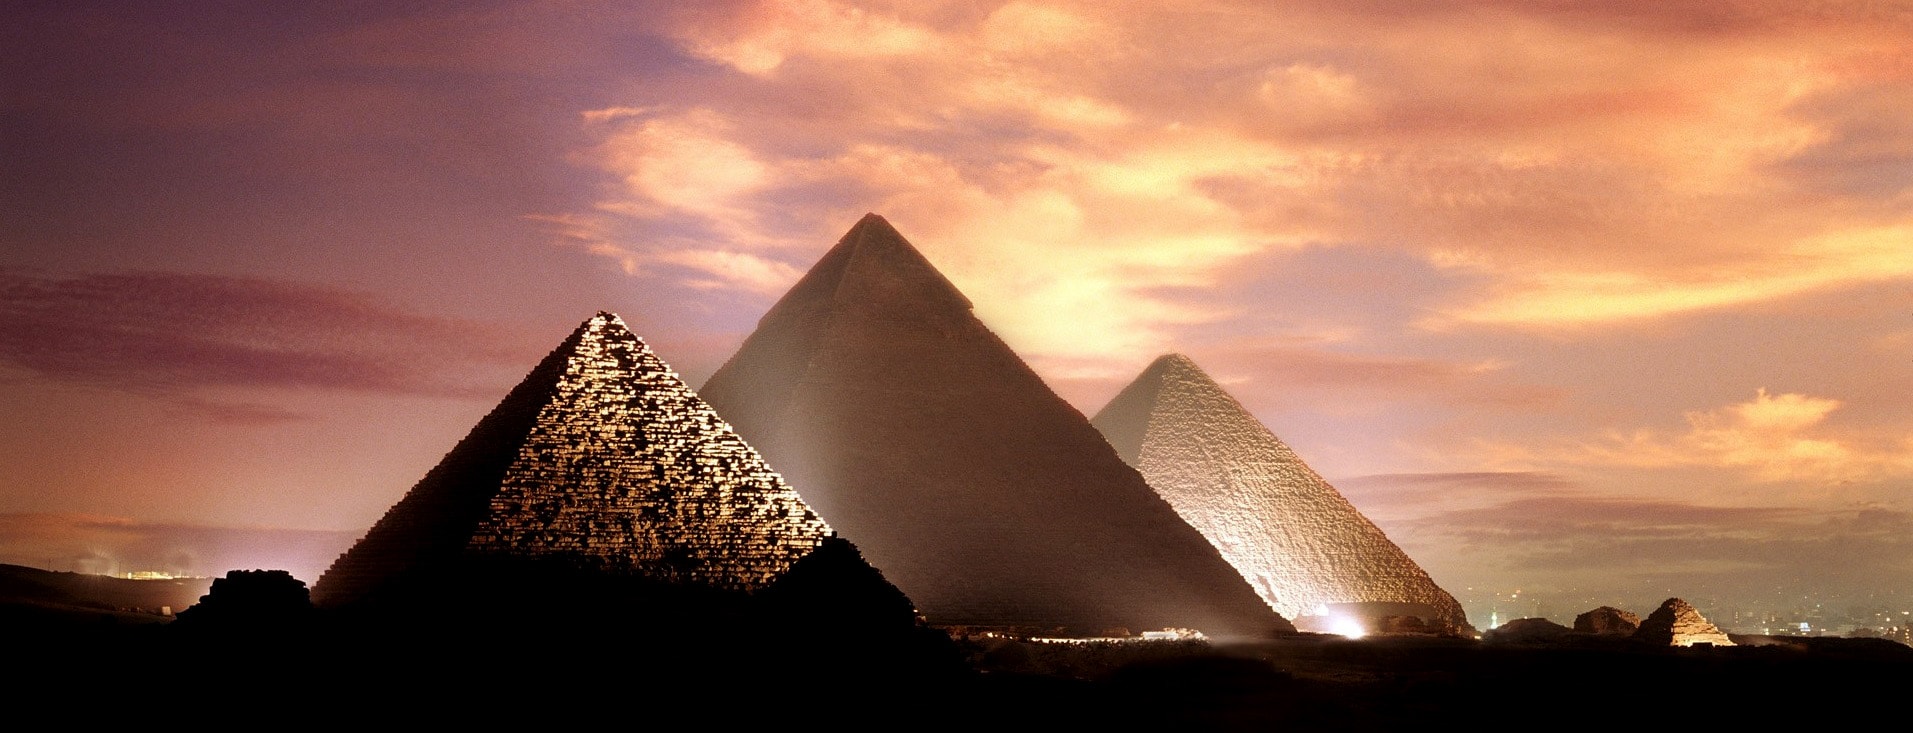 Pyramides Cachées